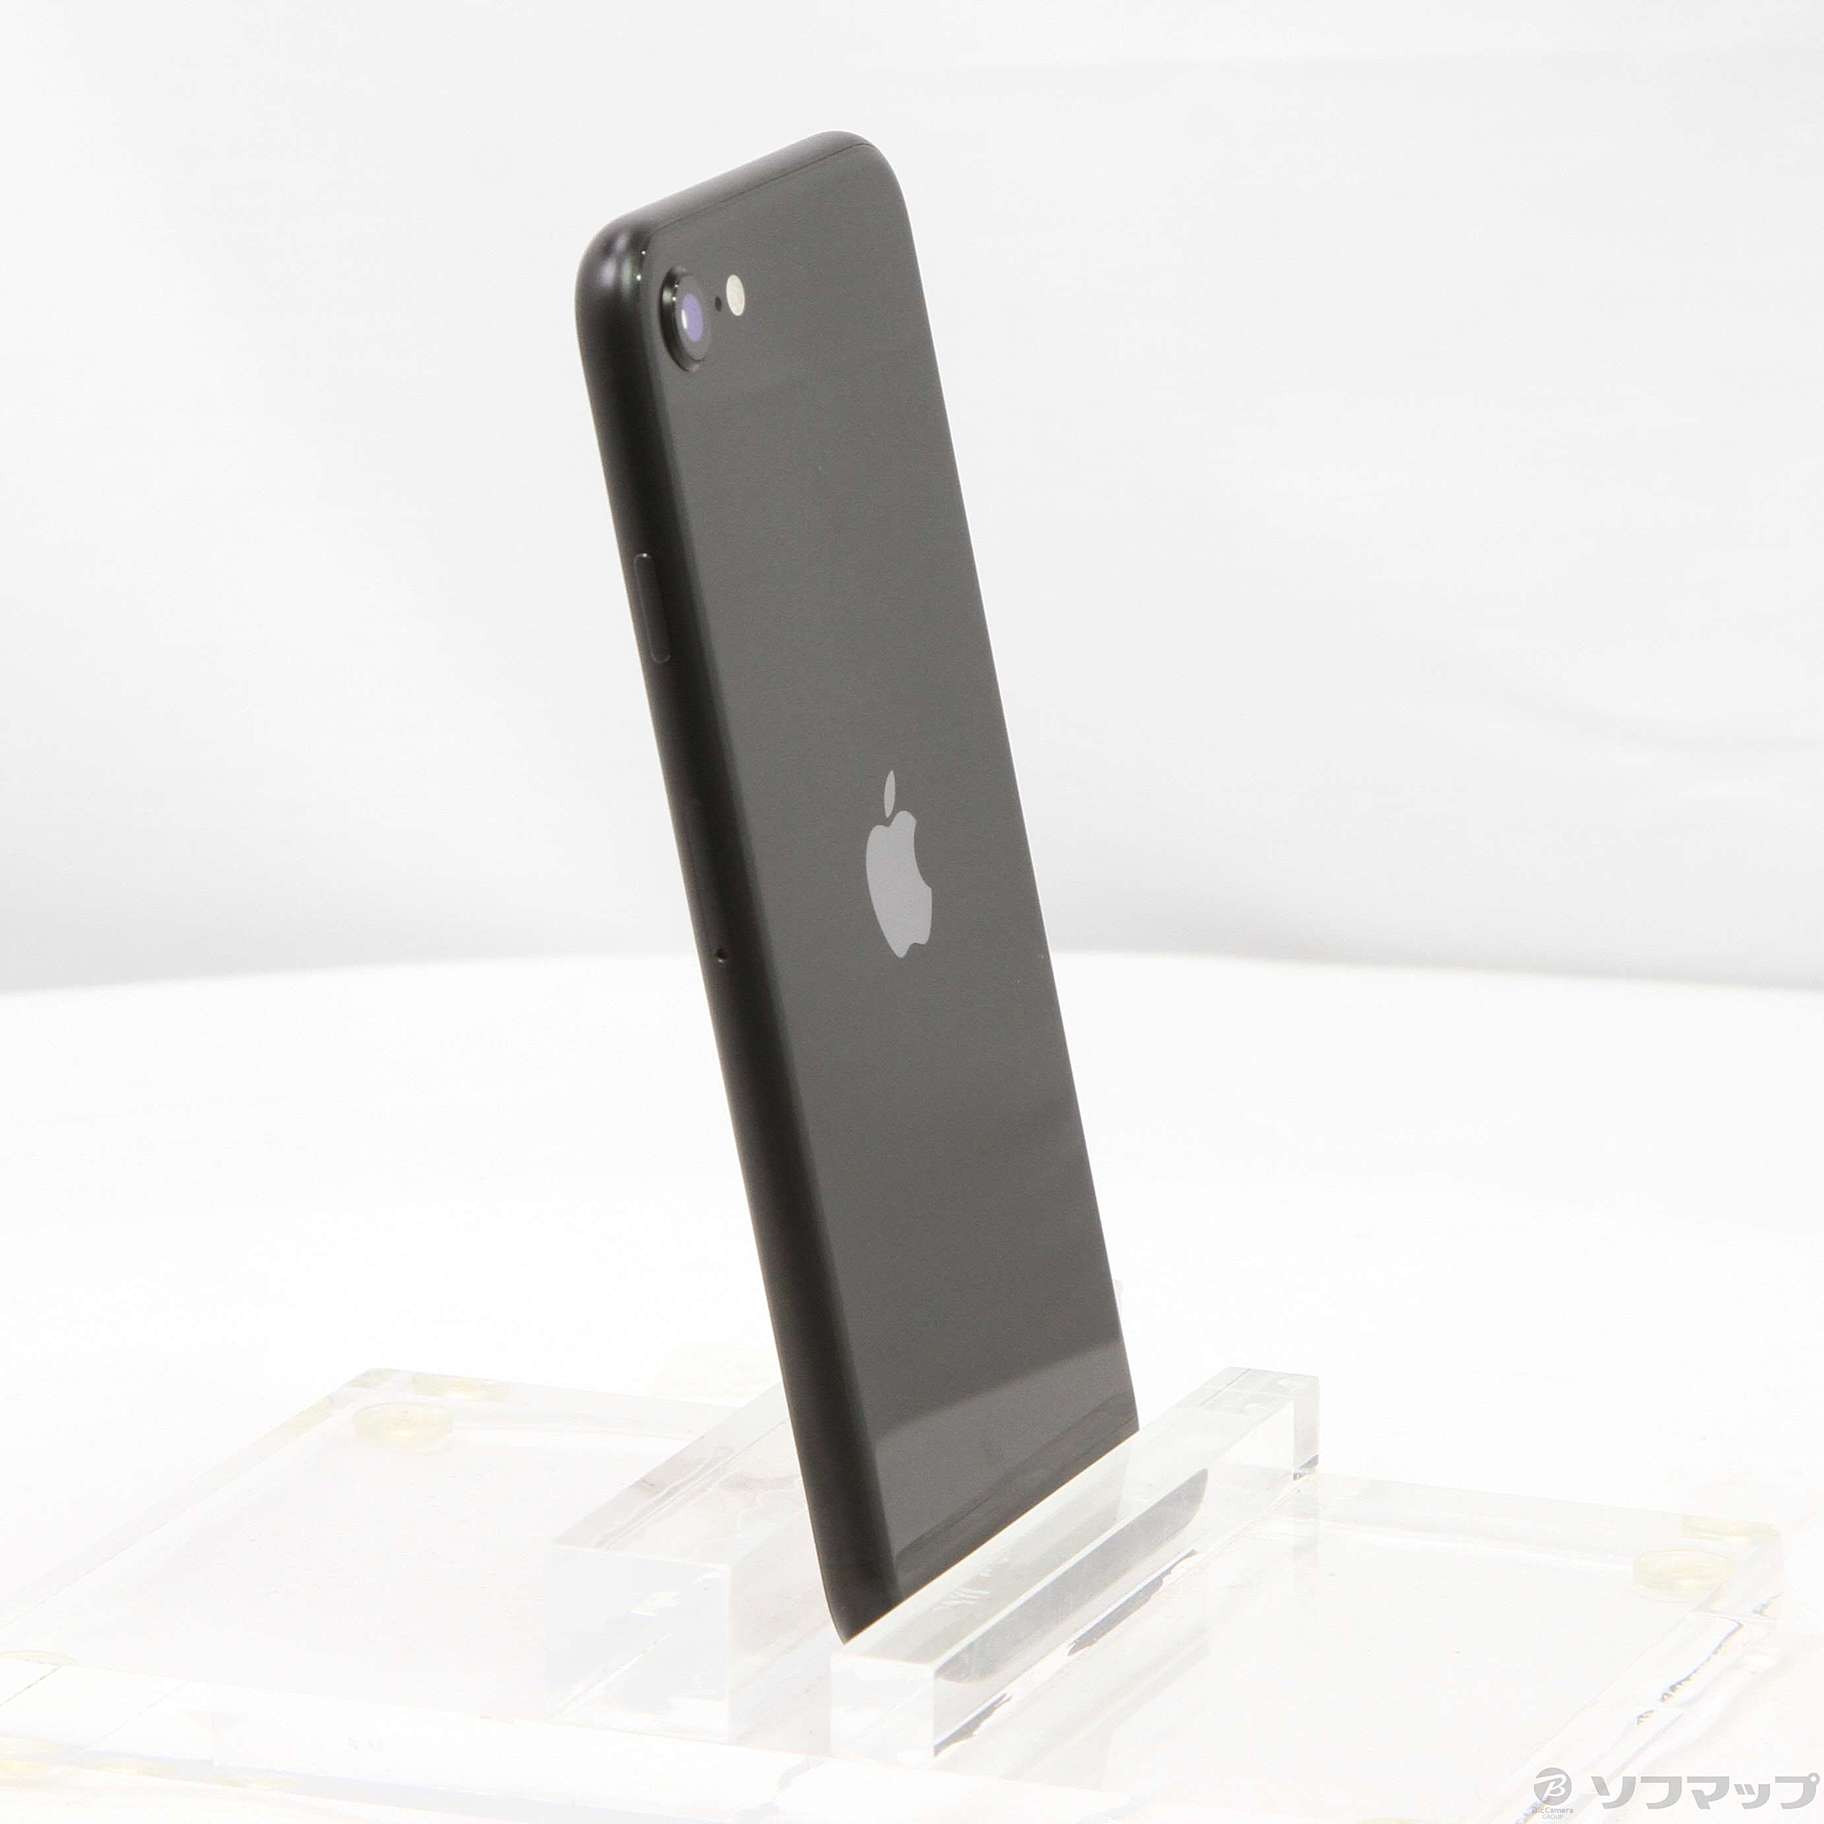 Apple iPhone SE 第2世代 128GB ブラック MHGT3J/A - www.sorbillomenu.com